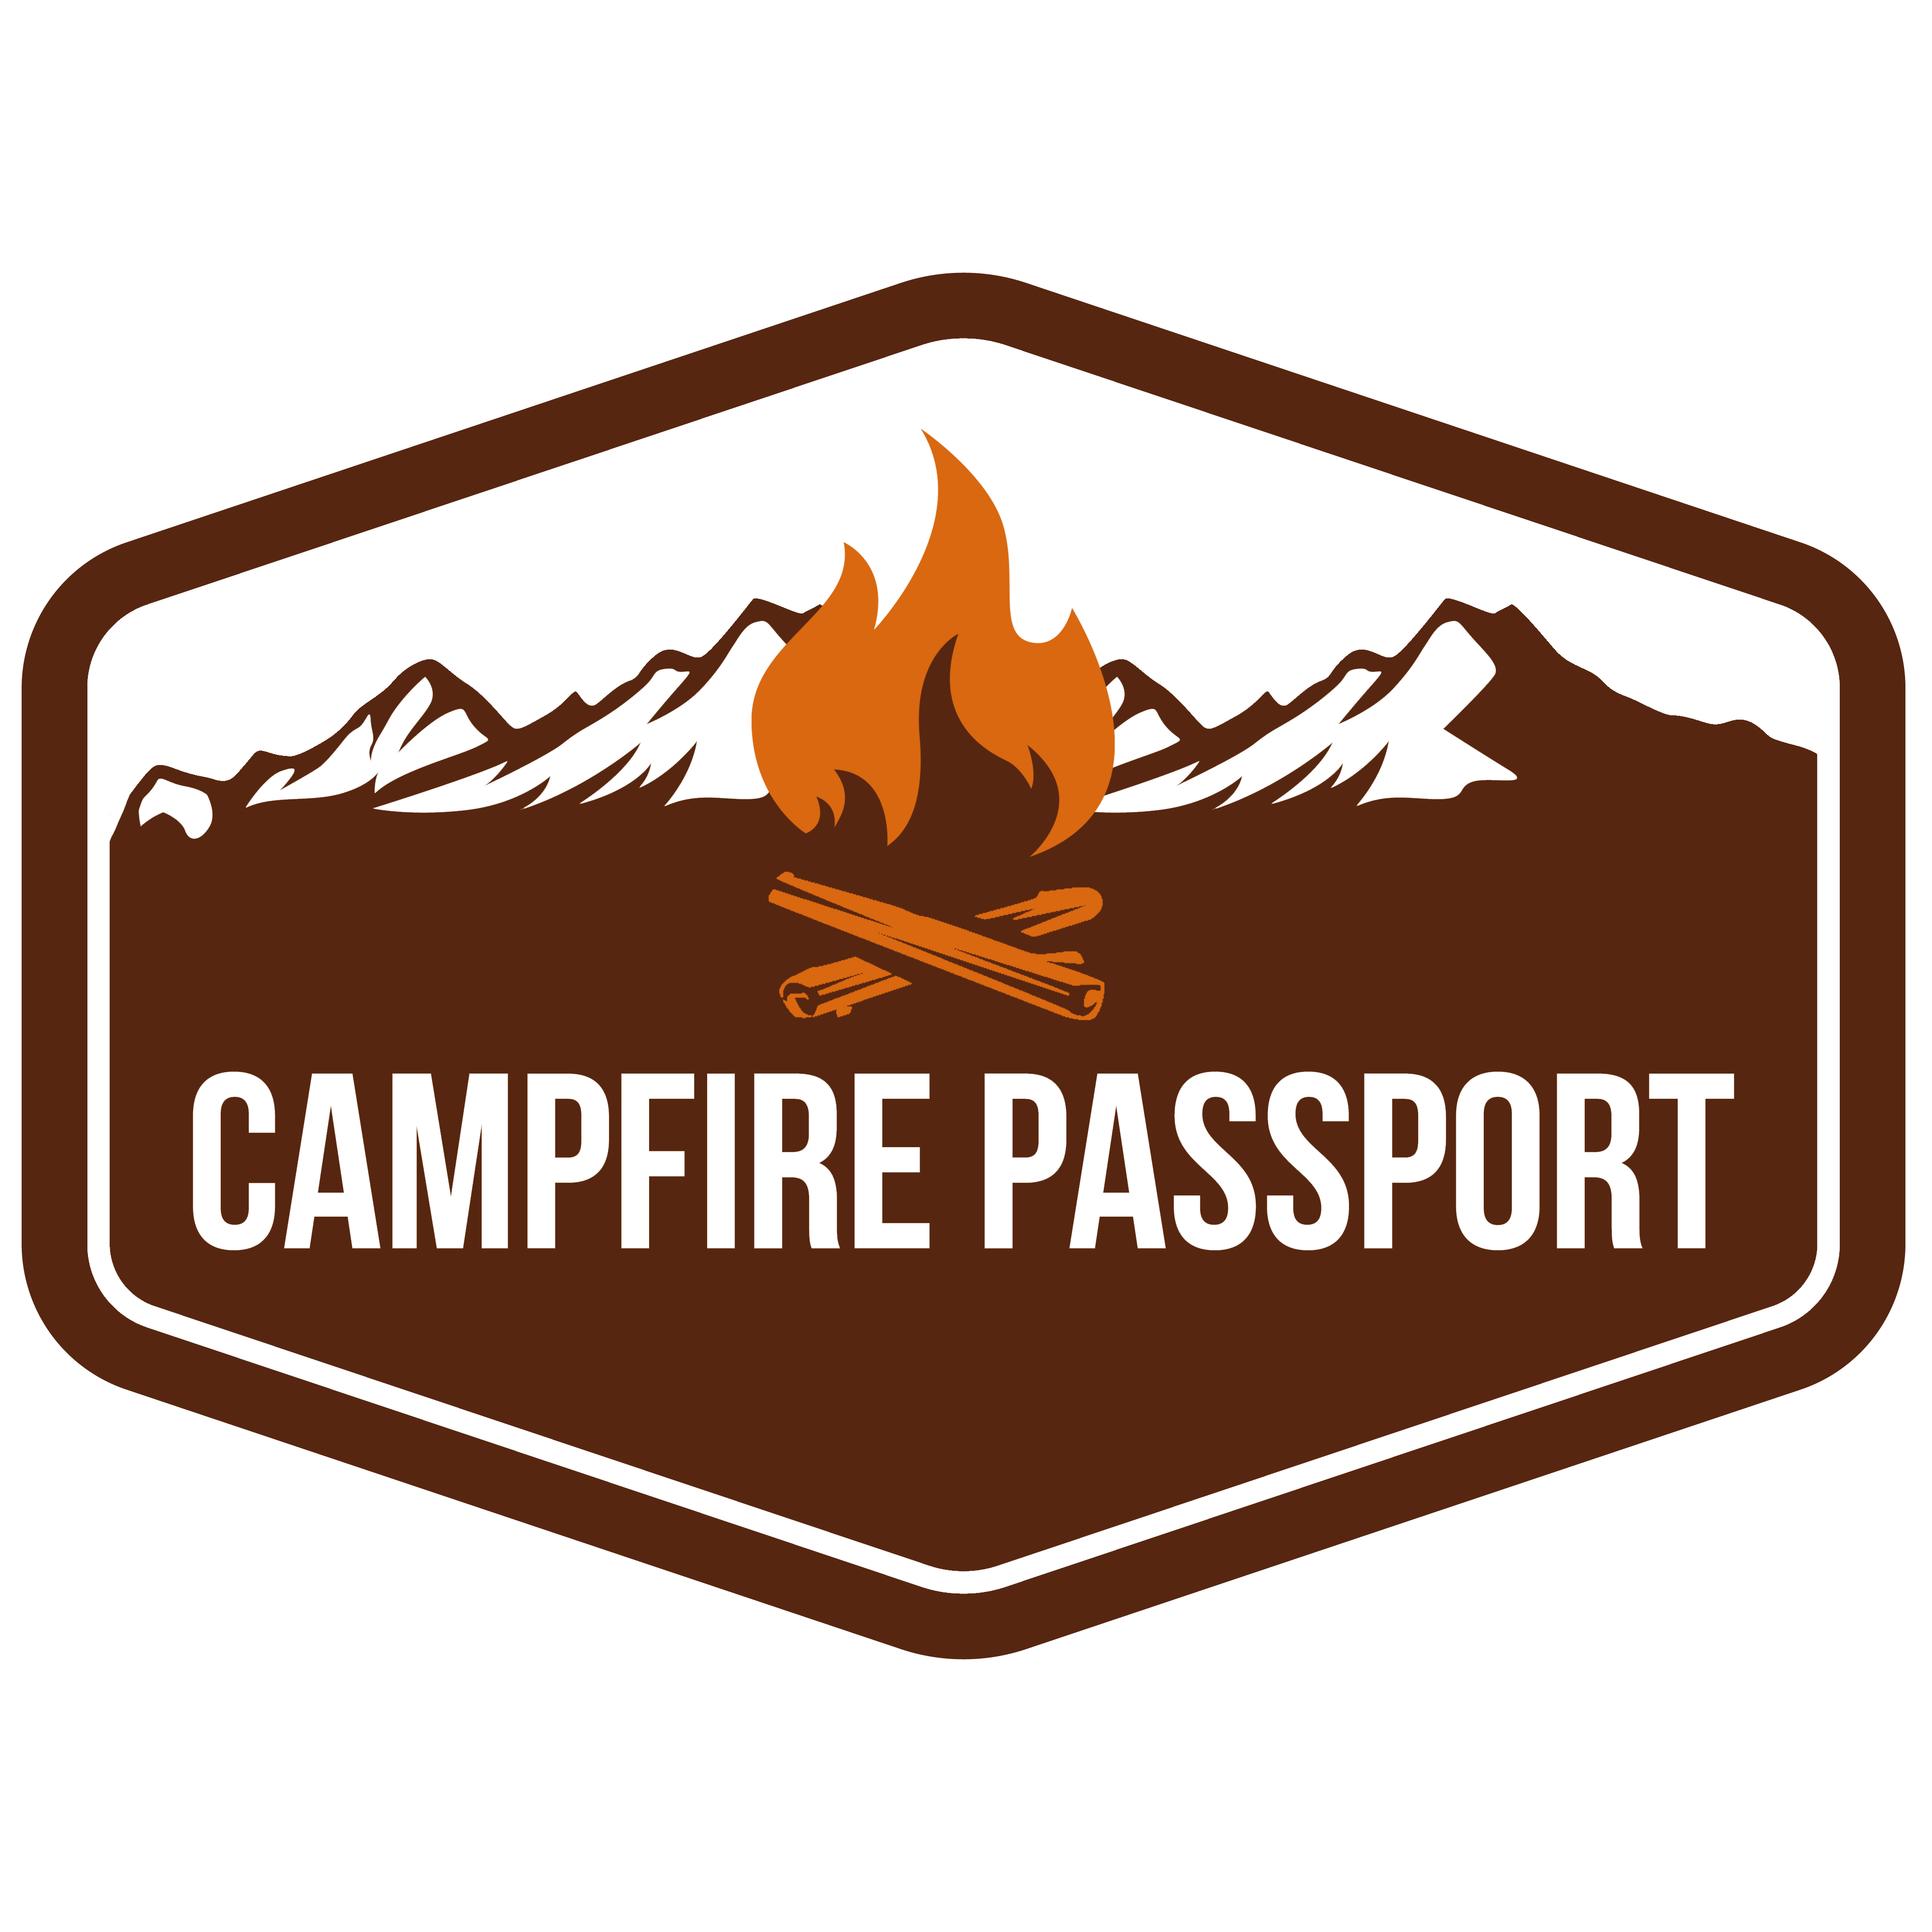 Campfire Passport